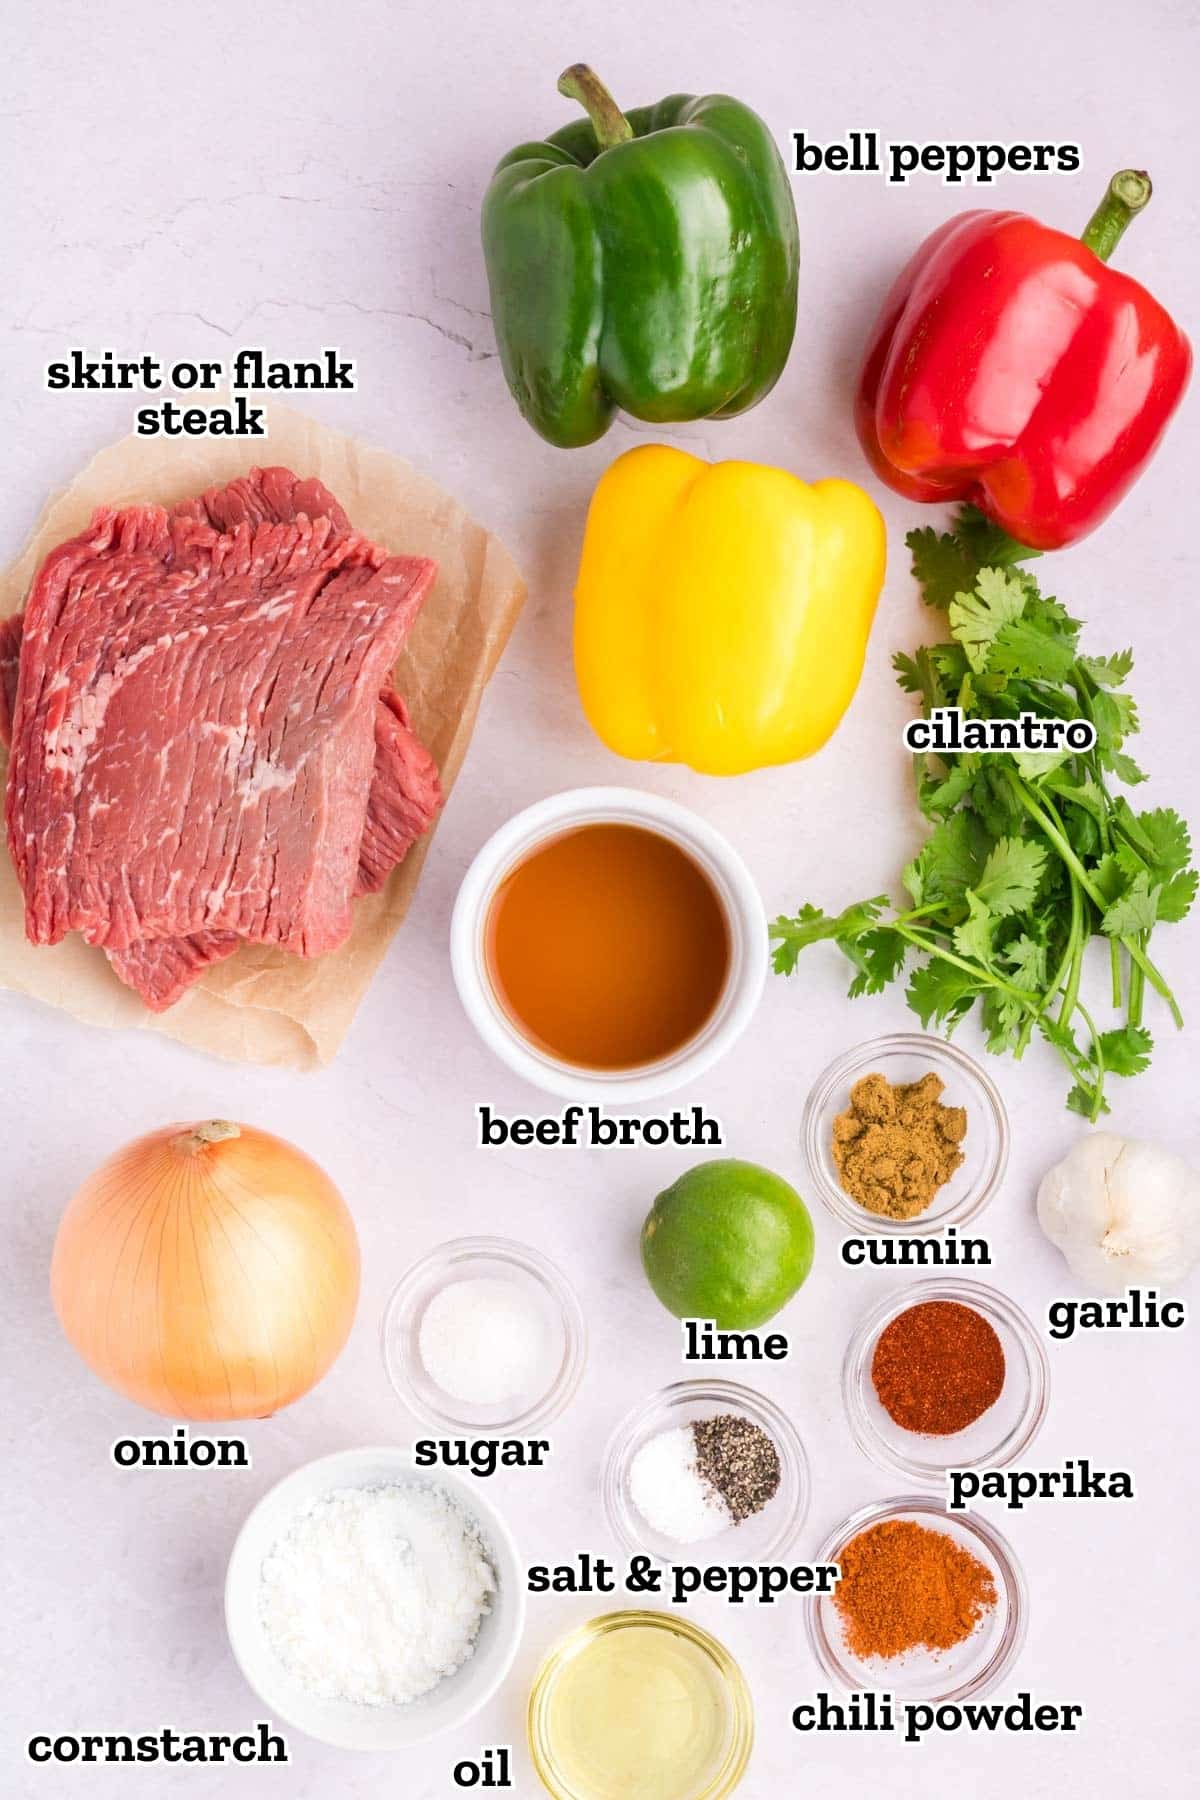 Labeled ingredients needed to make homemade steak fajitas.